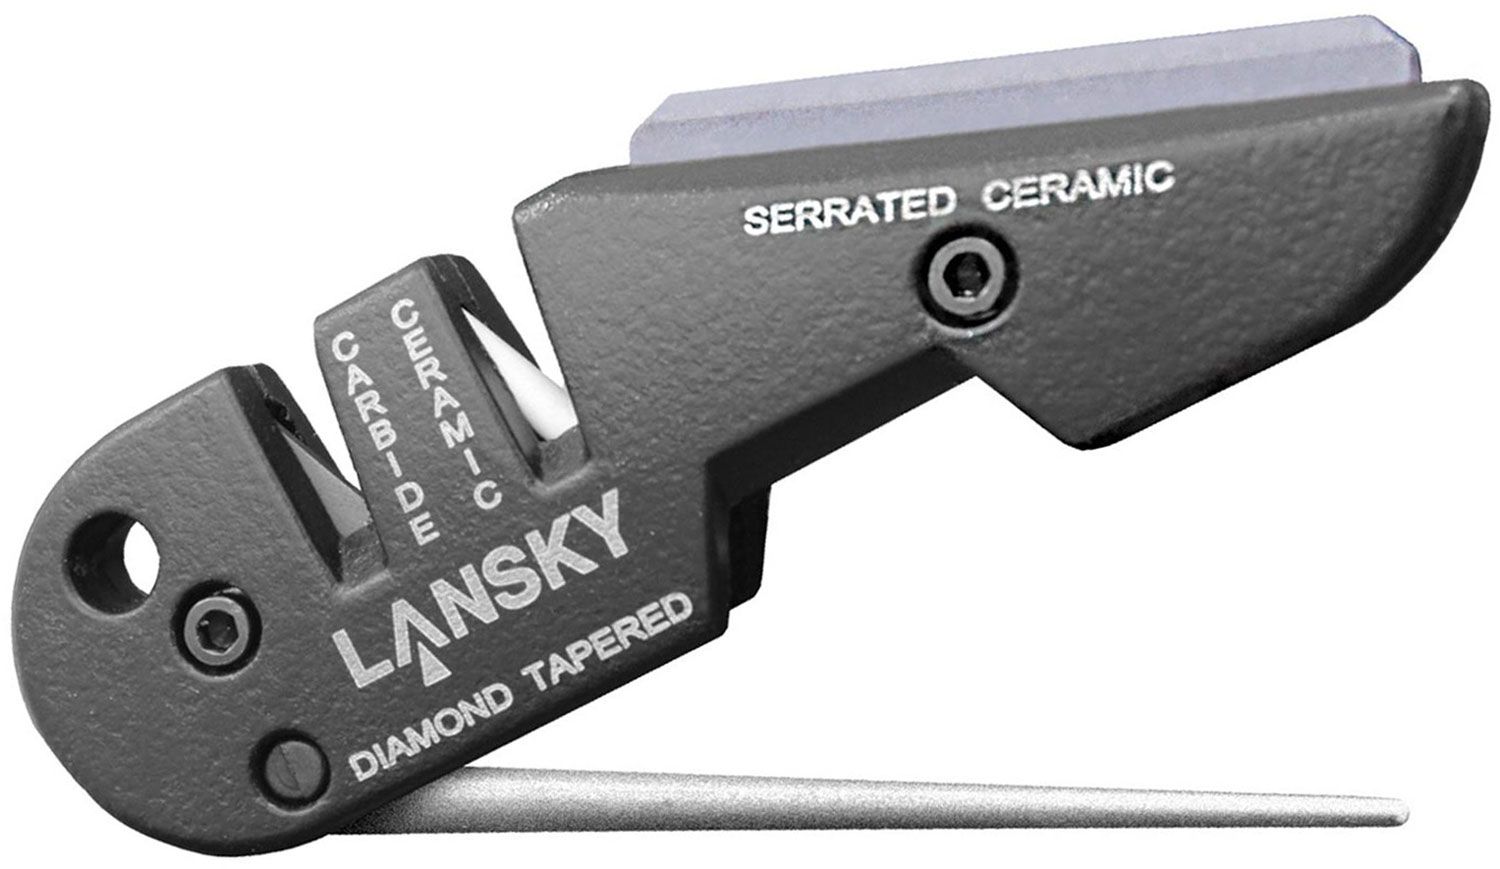 Lansky QuadSharp Sharpener Multi Angle Carbide Sharpener Tapered Ceramic Stone 